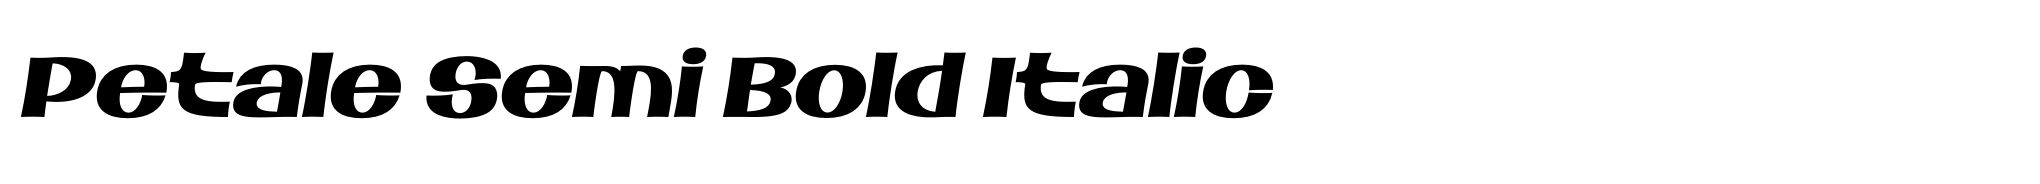 Petale Semi Bold Italic image